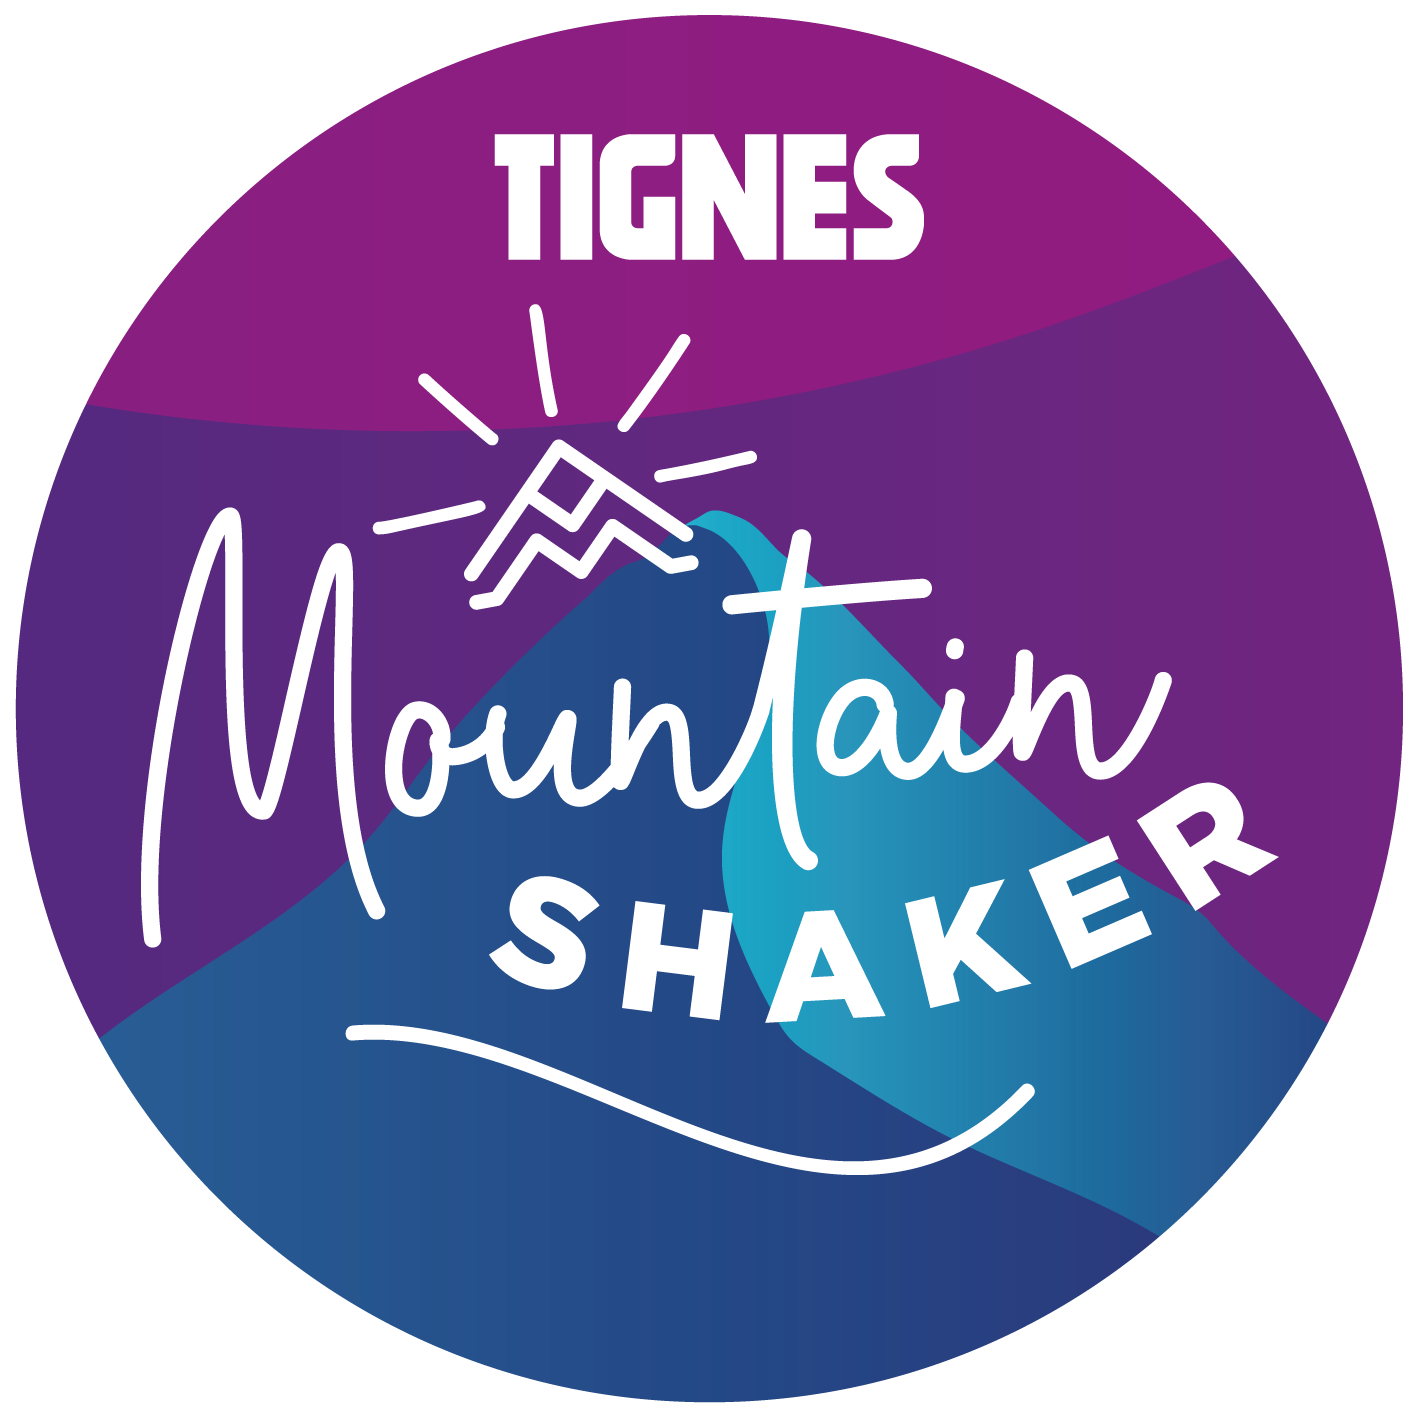 Tignes Mountain Shaker